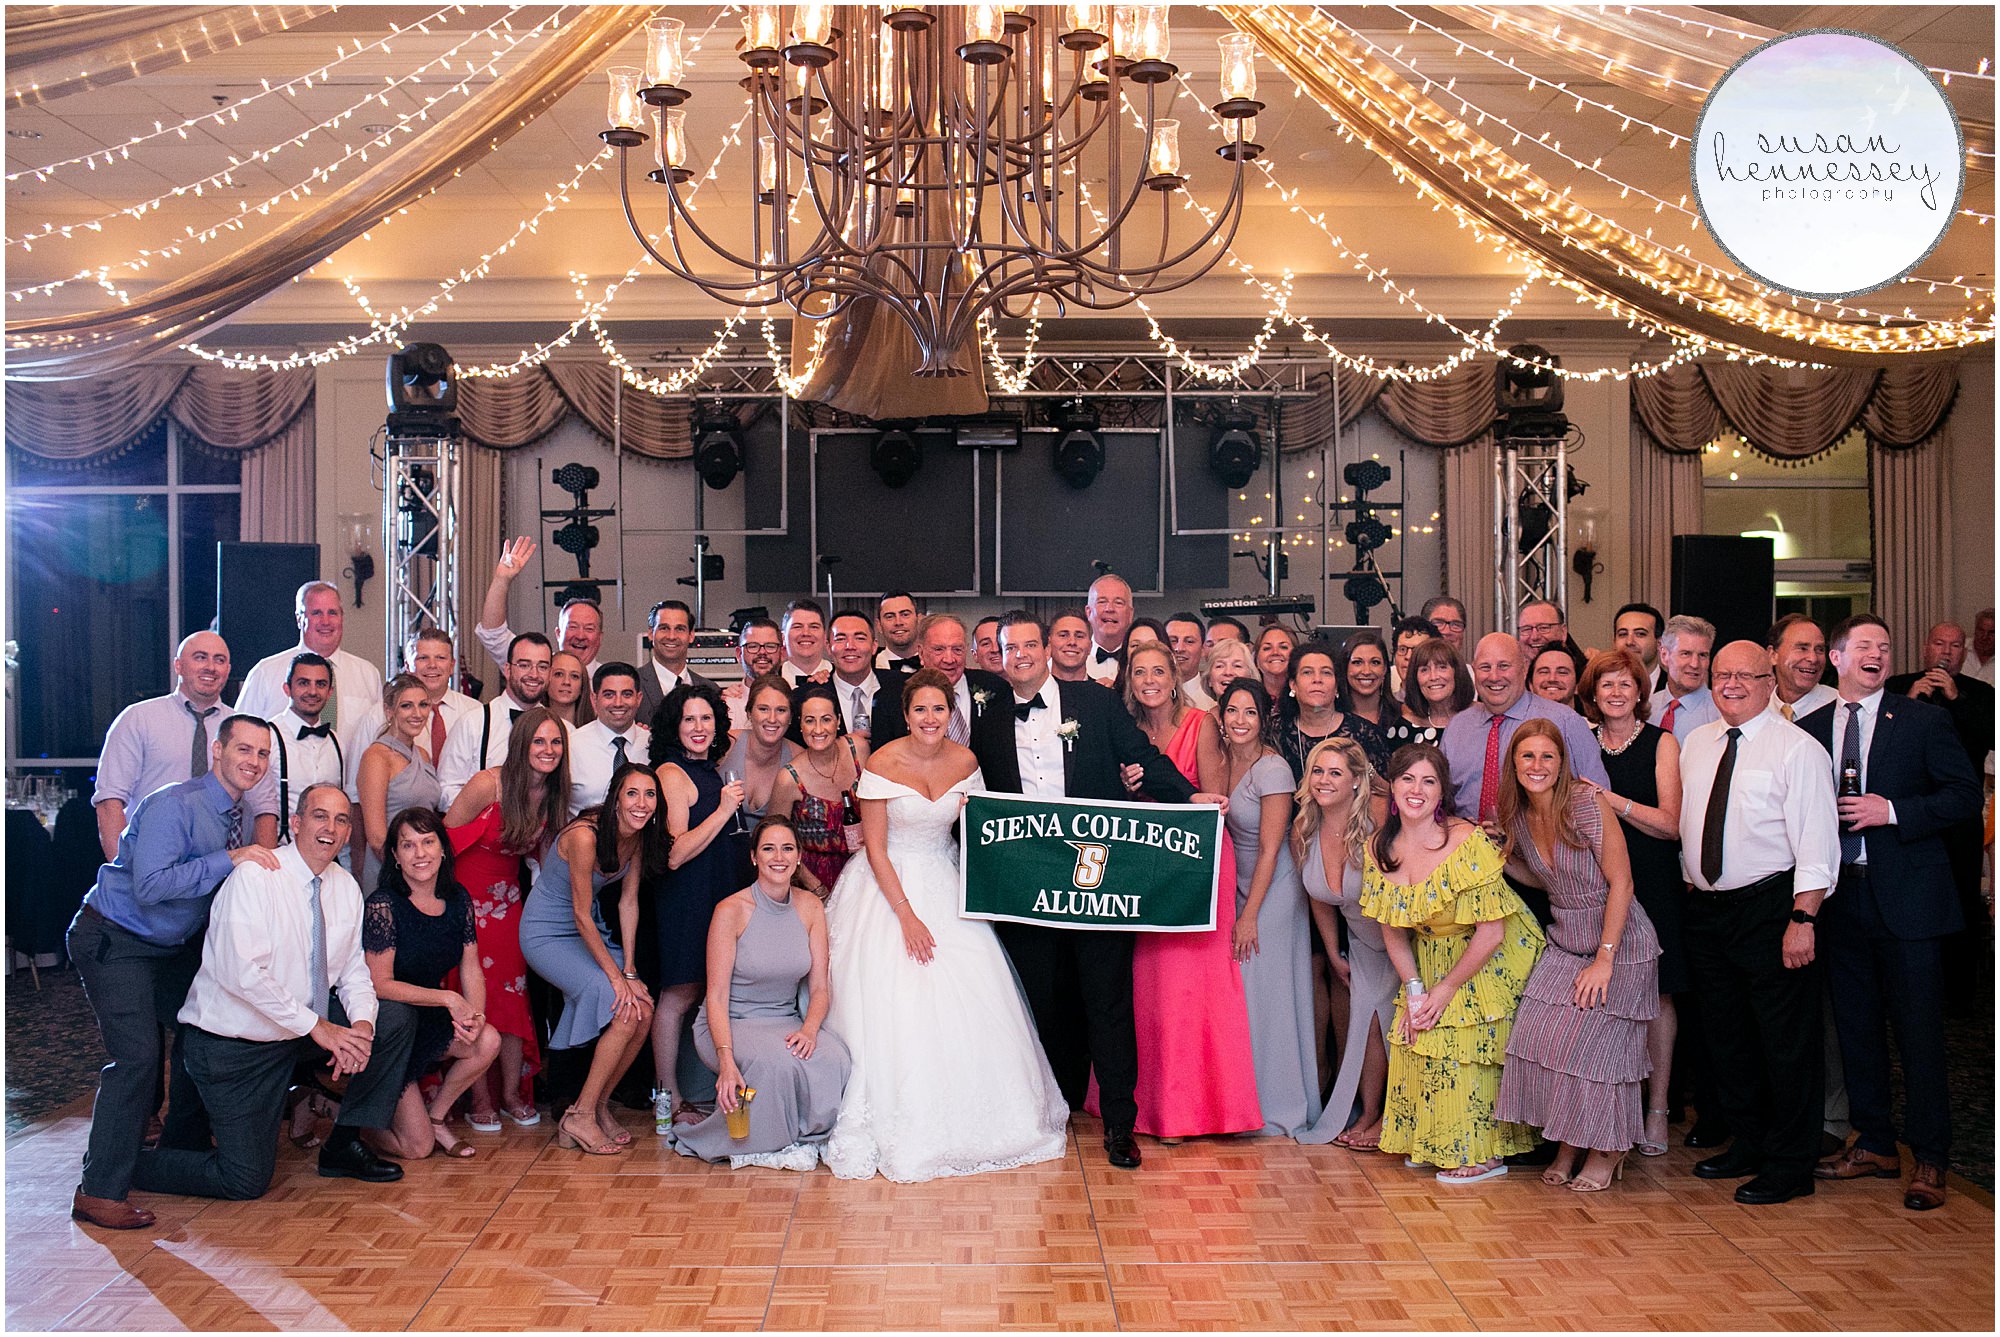 A Siena College Alumni photo at wedding reception